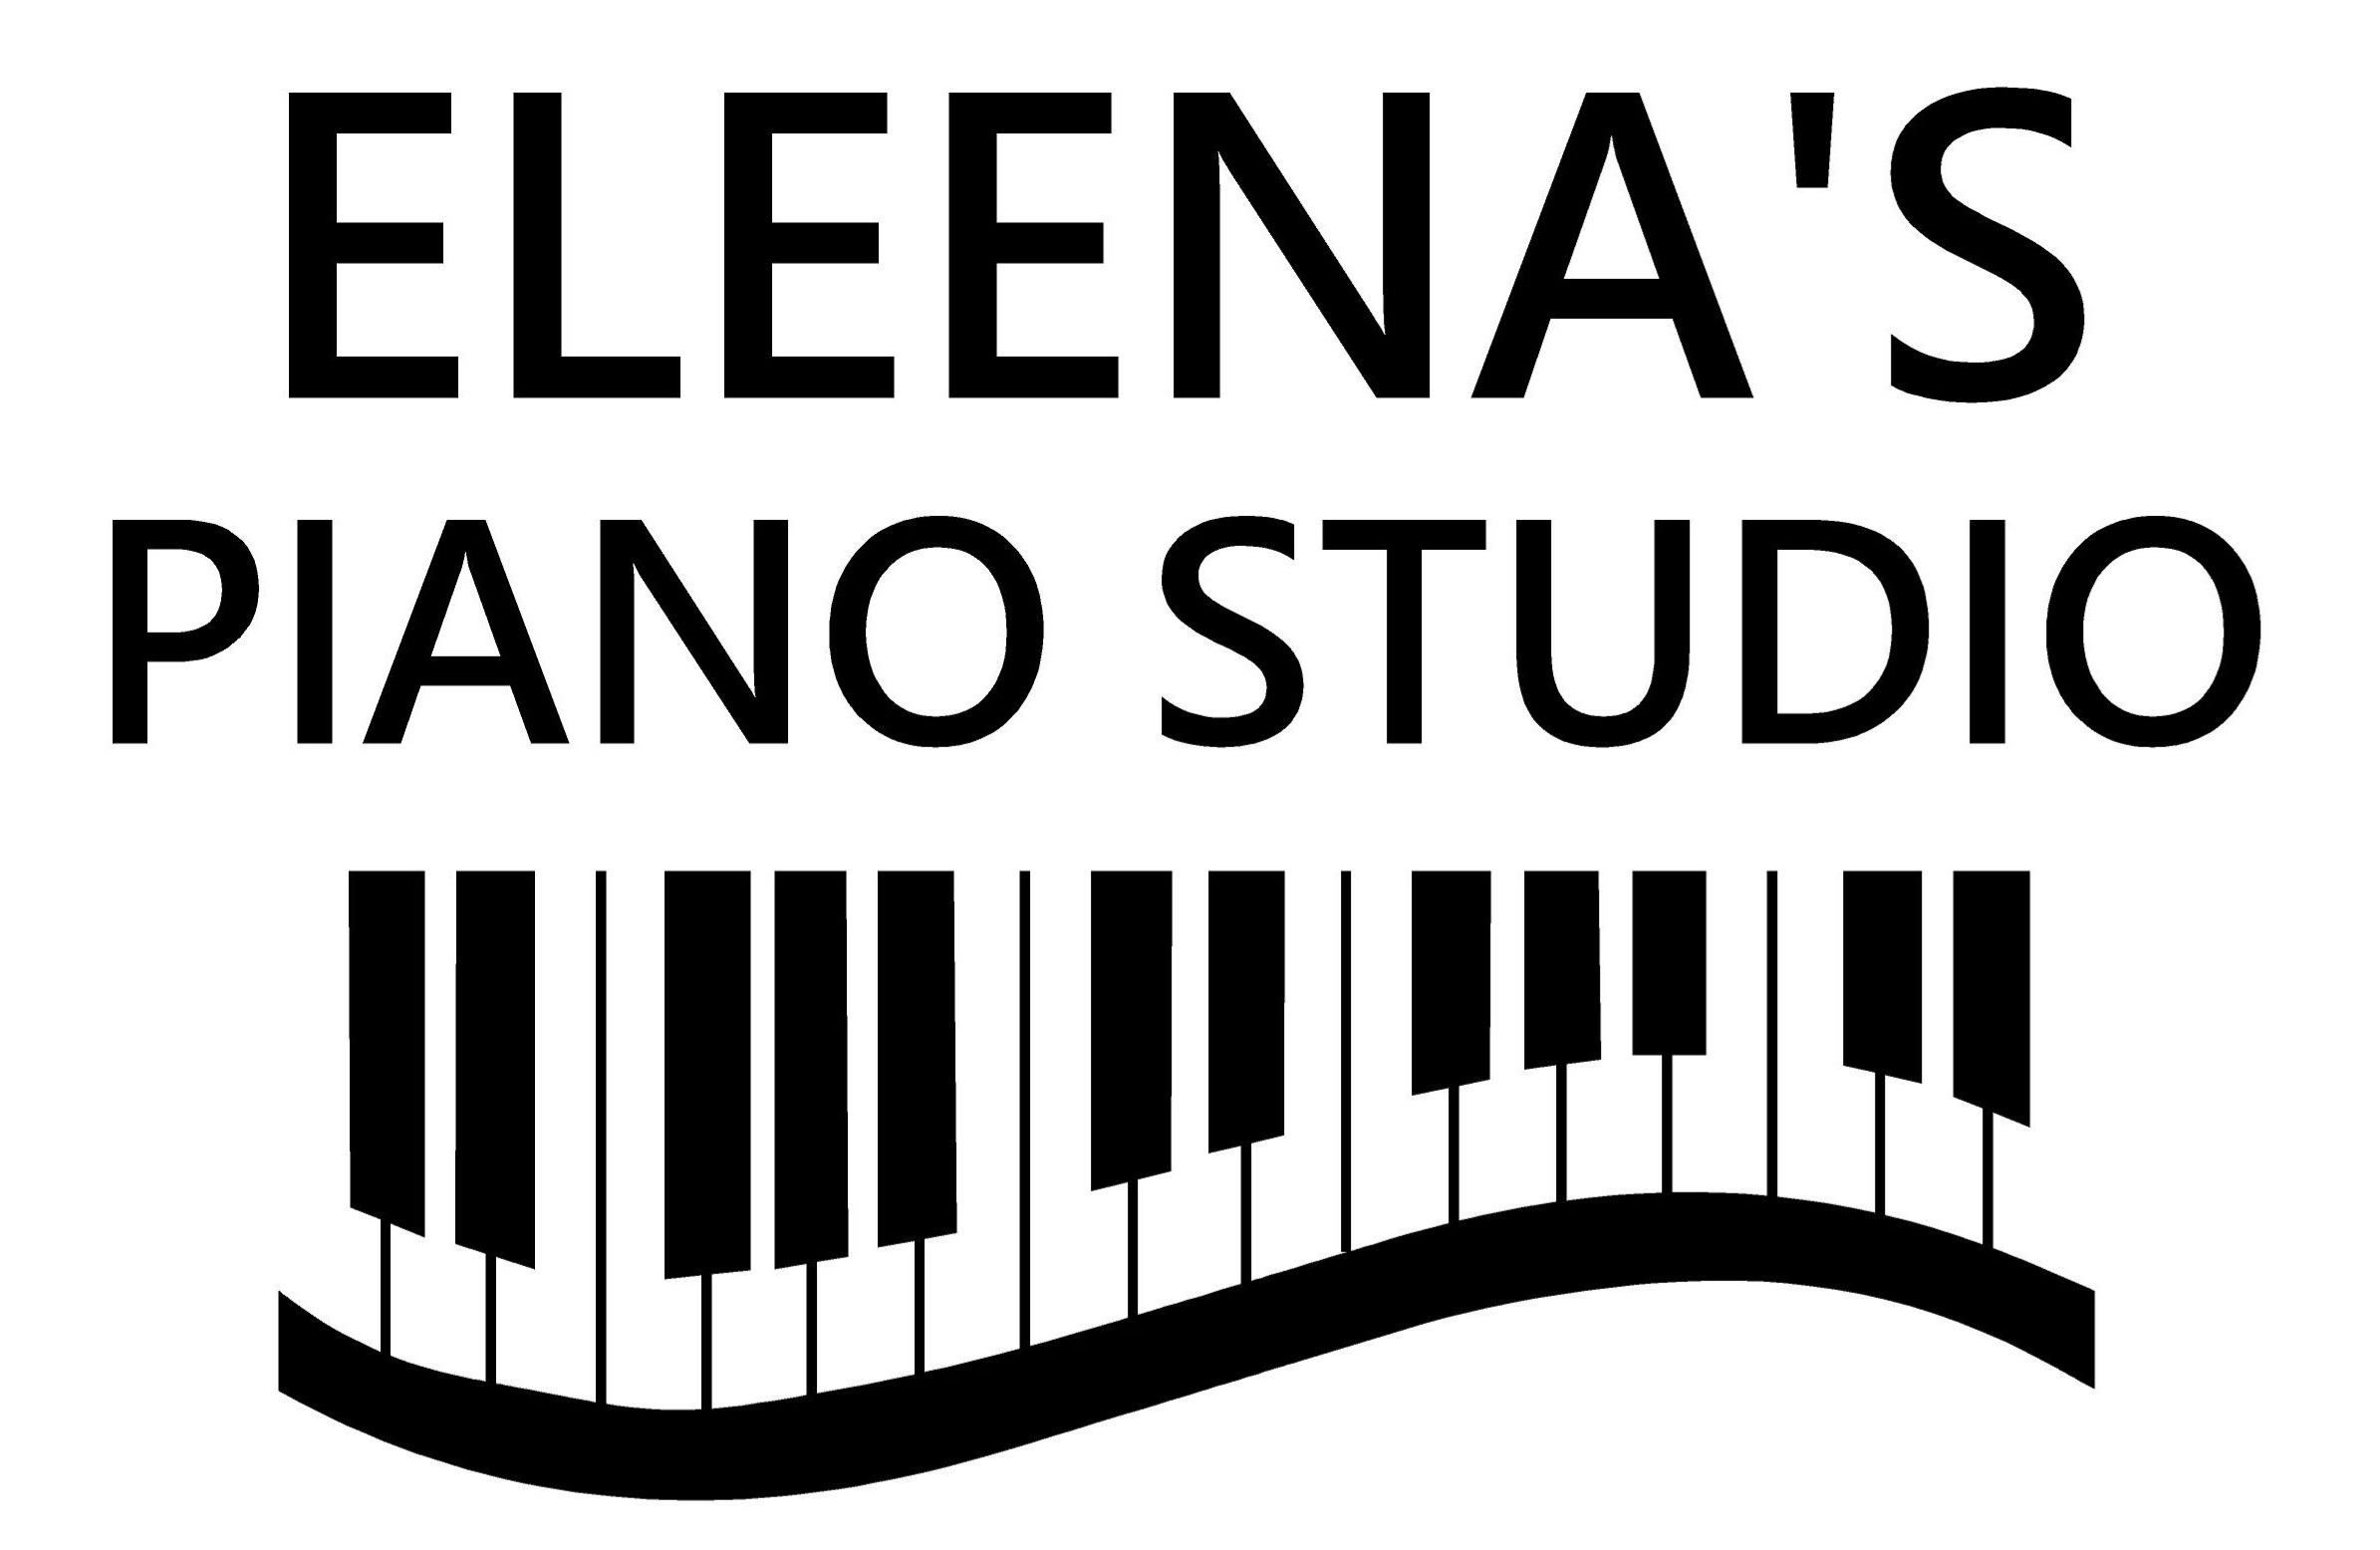 Eleena's piano studio